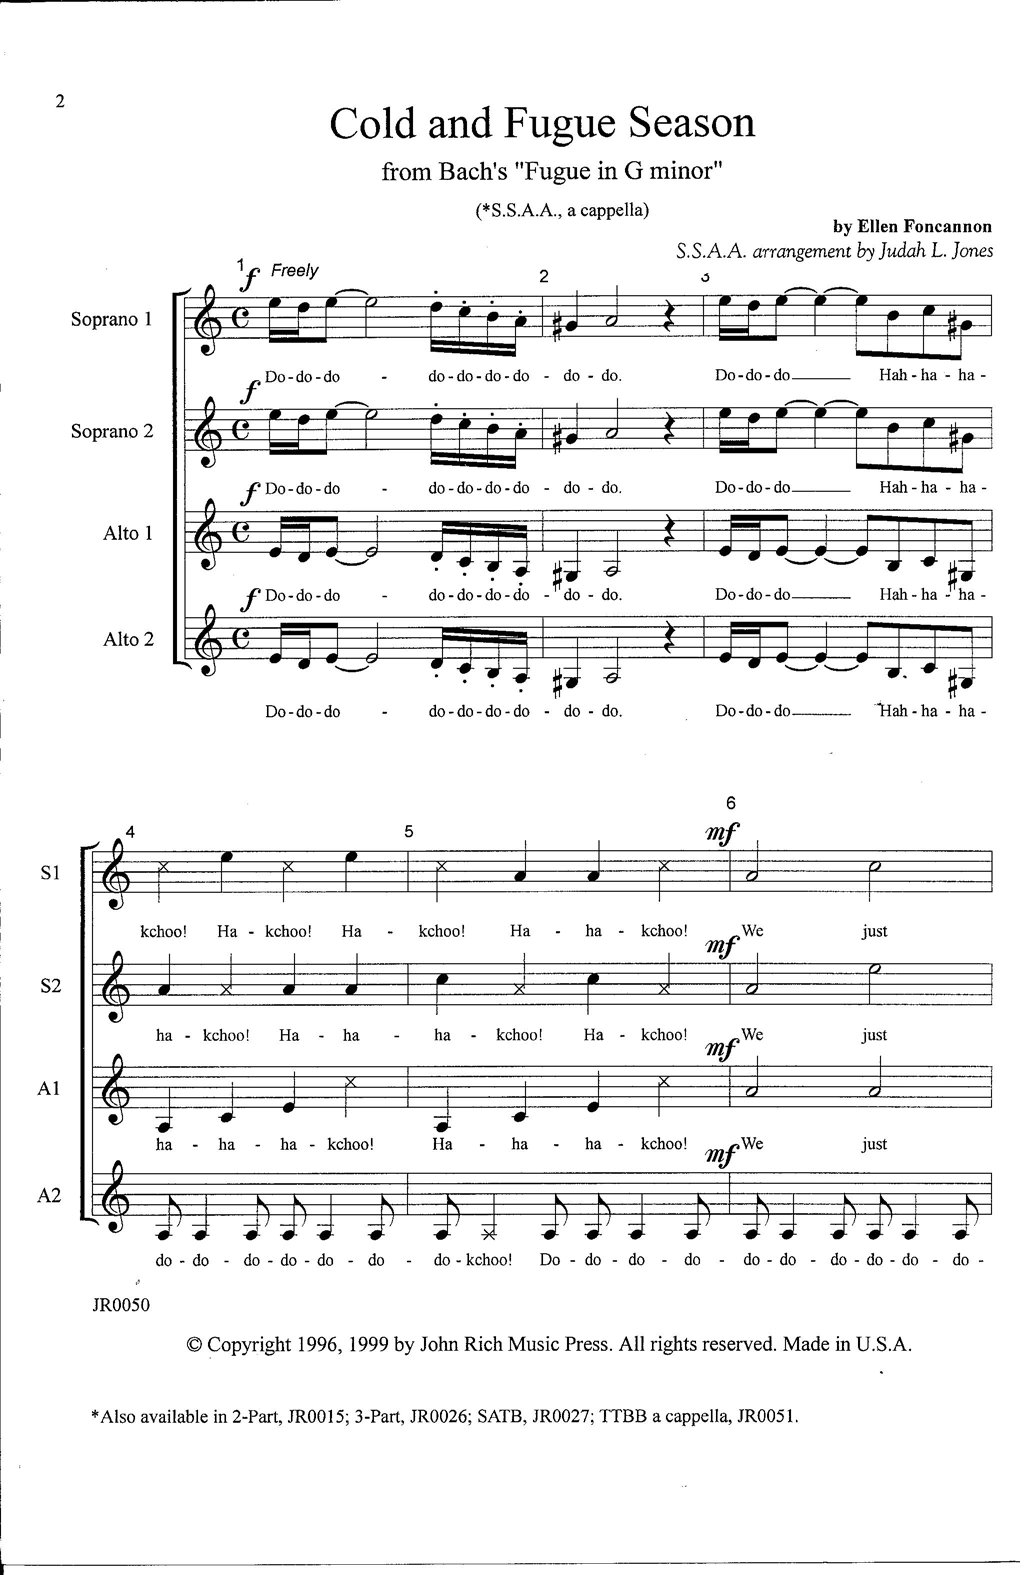 J.S. Bach Cold and Fugue Season (arr. Ellen Foncannon) Sheet Music Notes & Chords for 2-Part Choir - Download or Print PDF